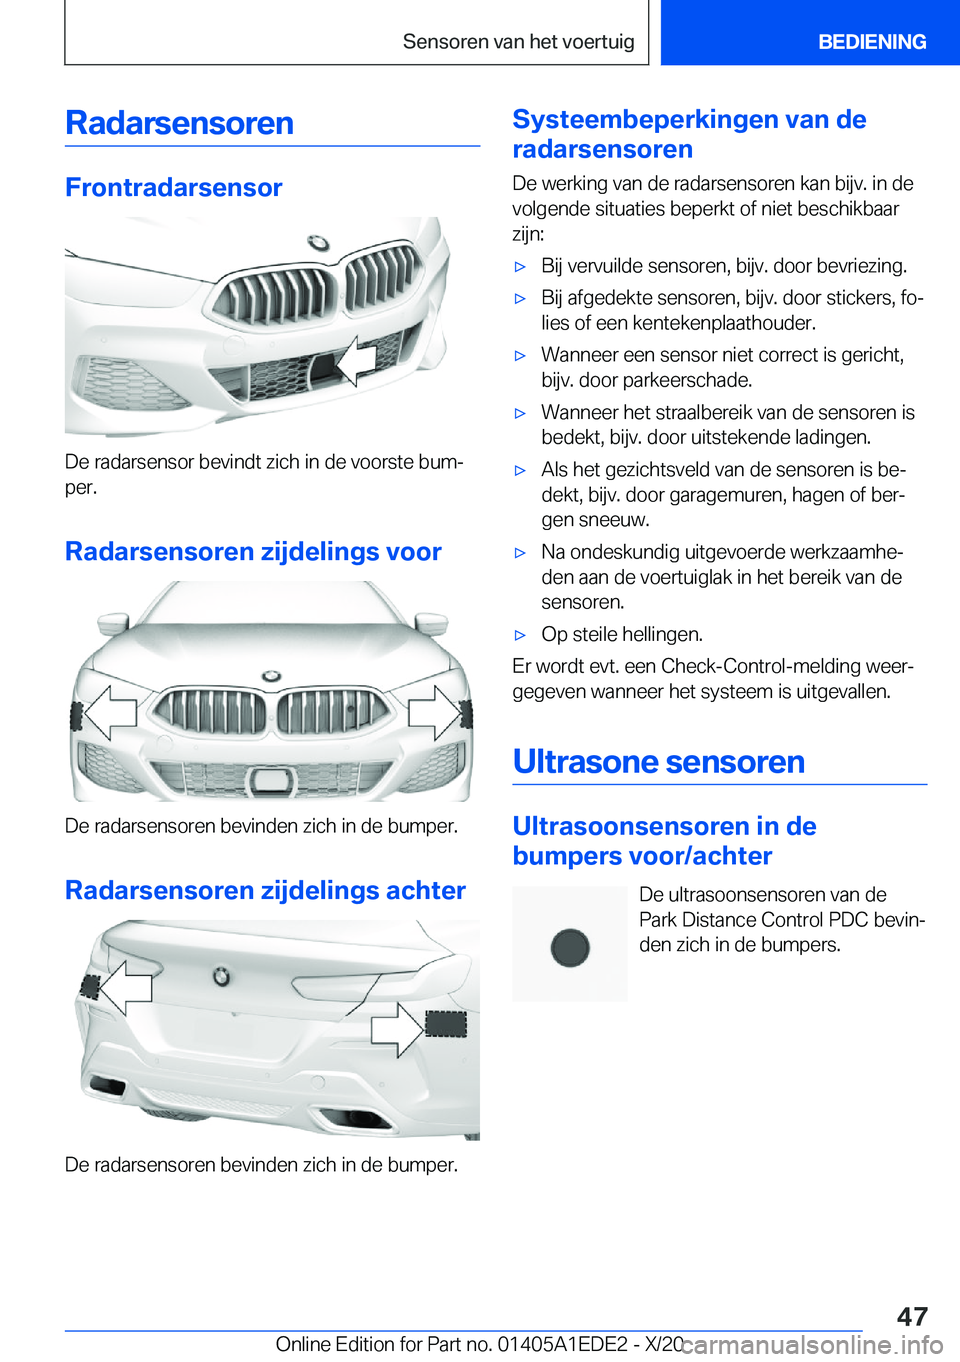 BMW 8 SERIES CONVERTIBLE 2021  Instructieboekjes (in Dutch) �R�a�d�a�r�s�e�n�s�o�r�e�n
�F�r�o�n�t�r�a�d�a�r�s�e�n�s�o�r
�D�e��r�a�d�a�r�s�e�n�s�o�r��b�e�v�i�n�d�t��z�i�c�h��i�n��d�e��v�o�o�r�s�t�e��b�u�mj�p�e�r�.
�R�a�d�a�r�s�e�n�s�o�r�e�n��z�i�j�d�e�